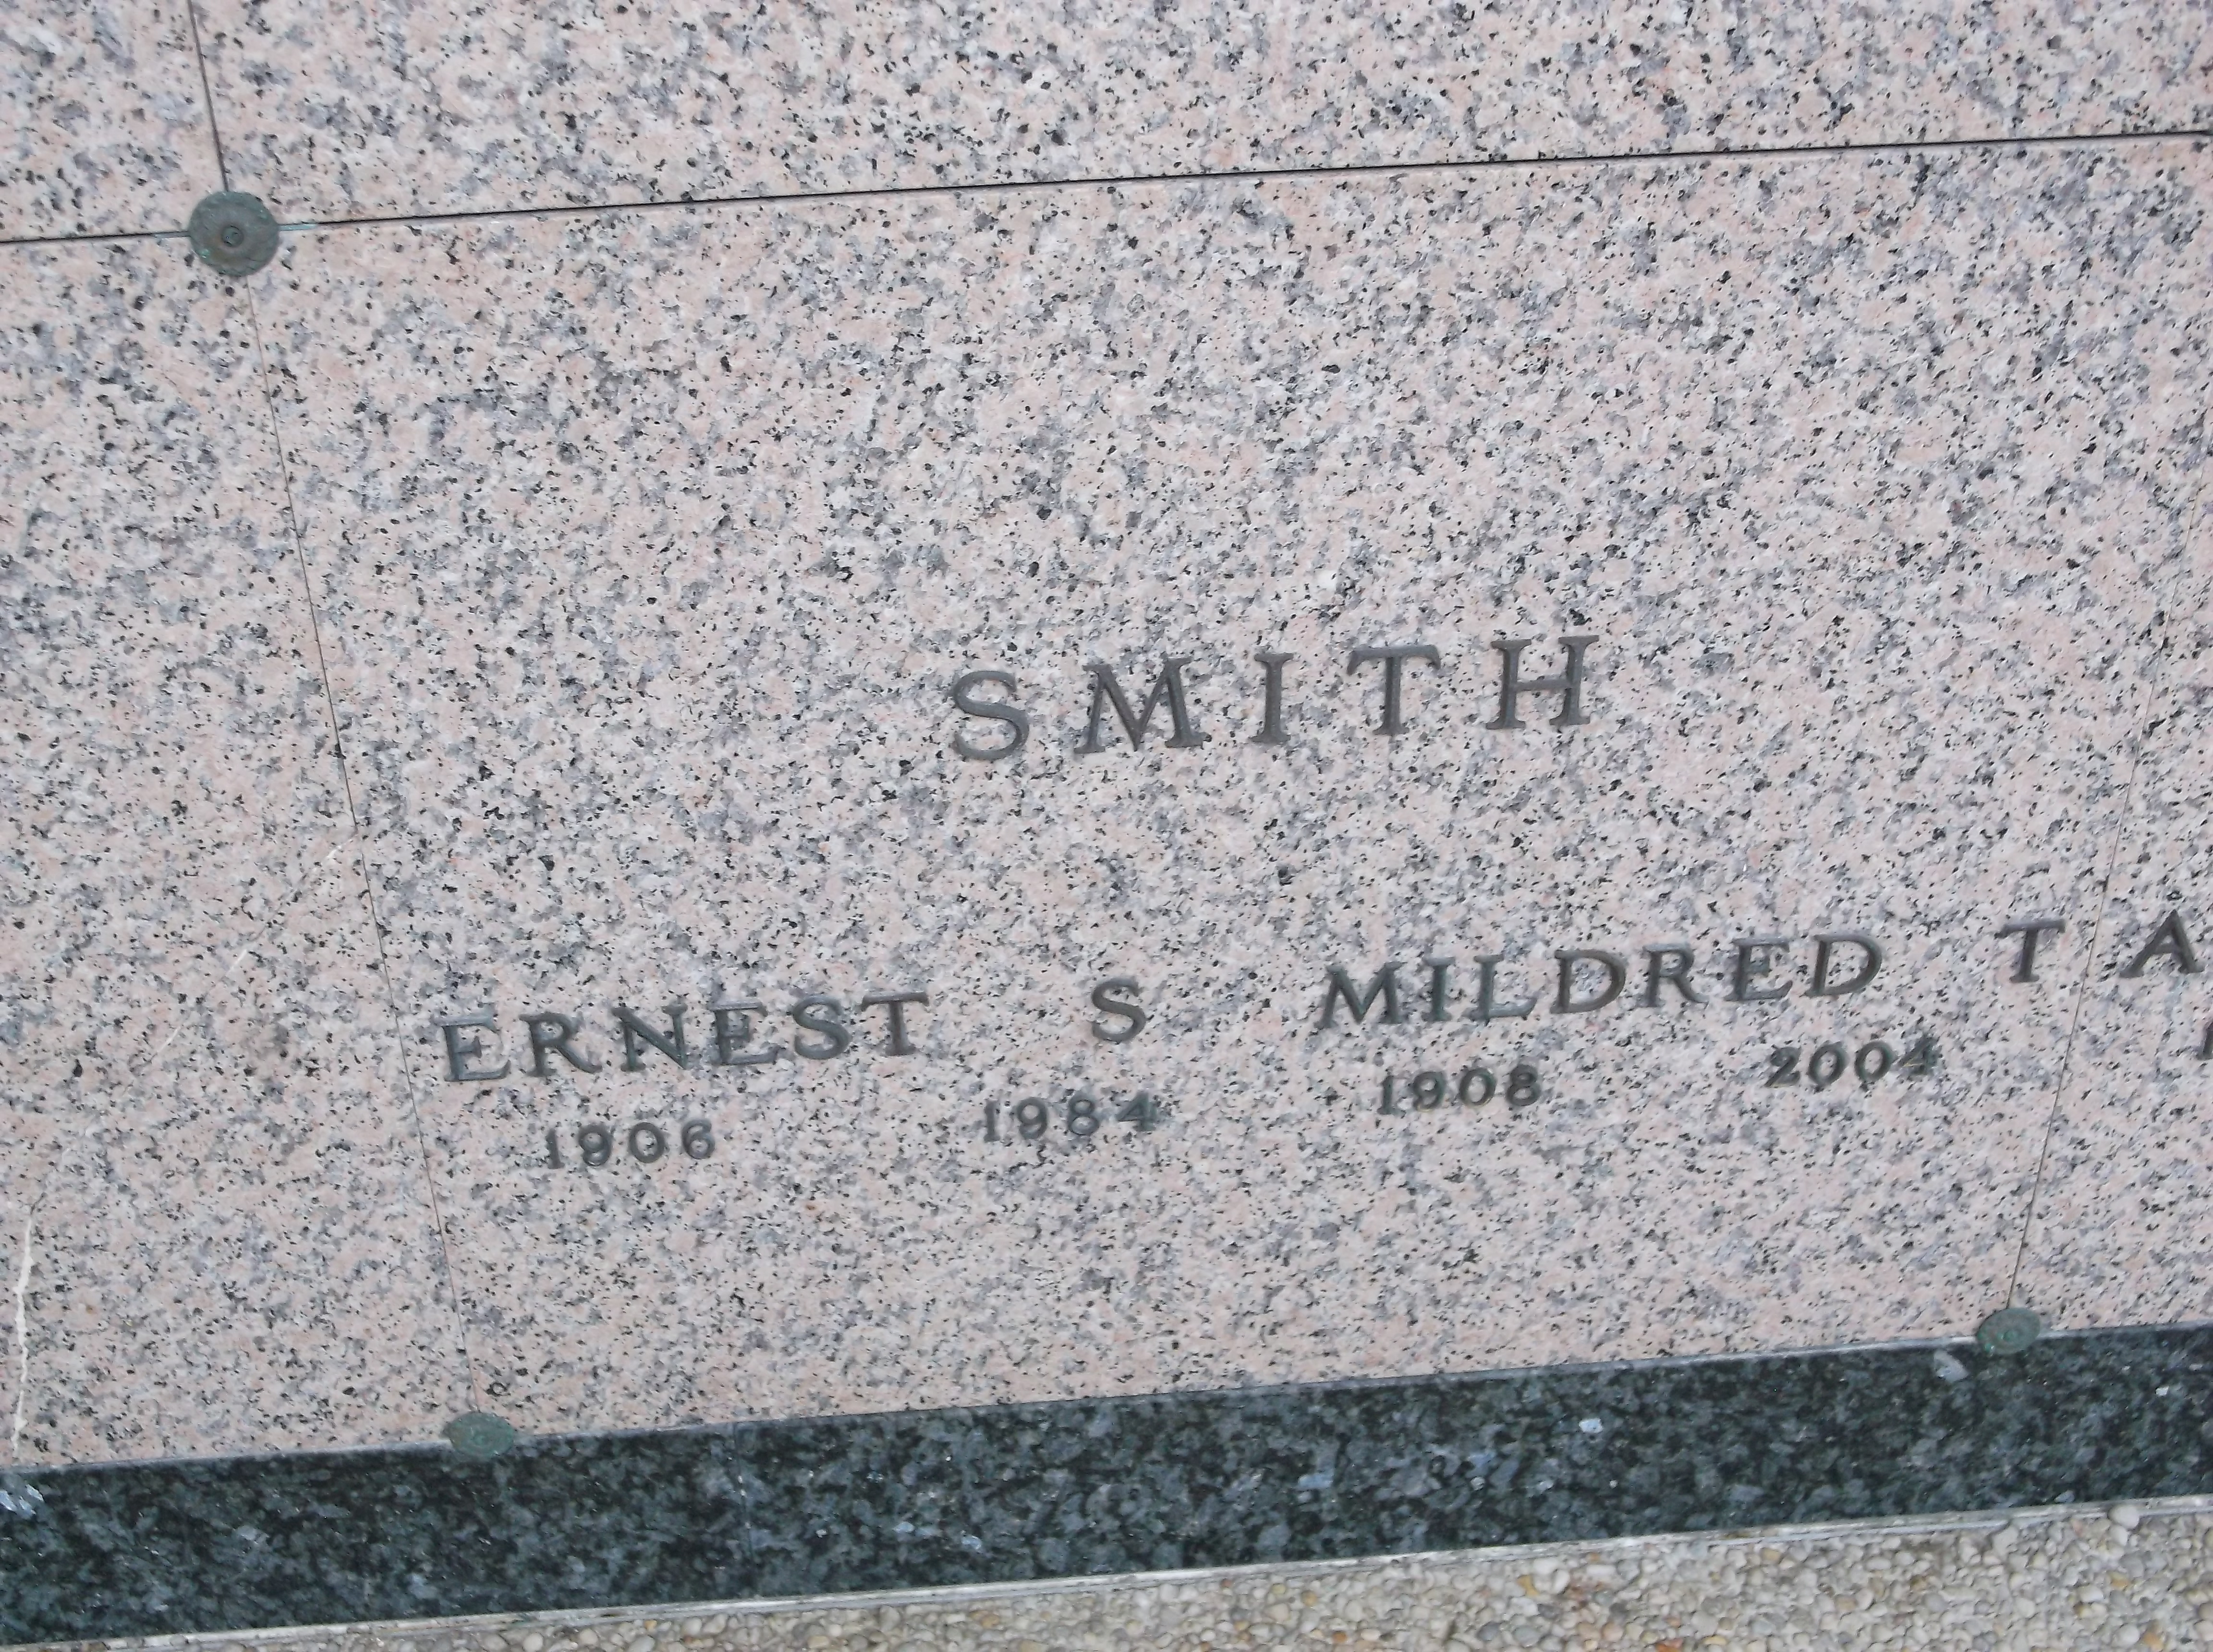 Ernest S Smith